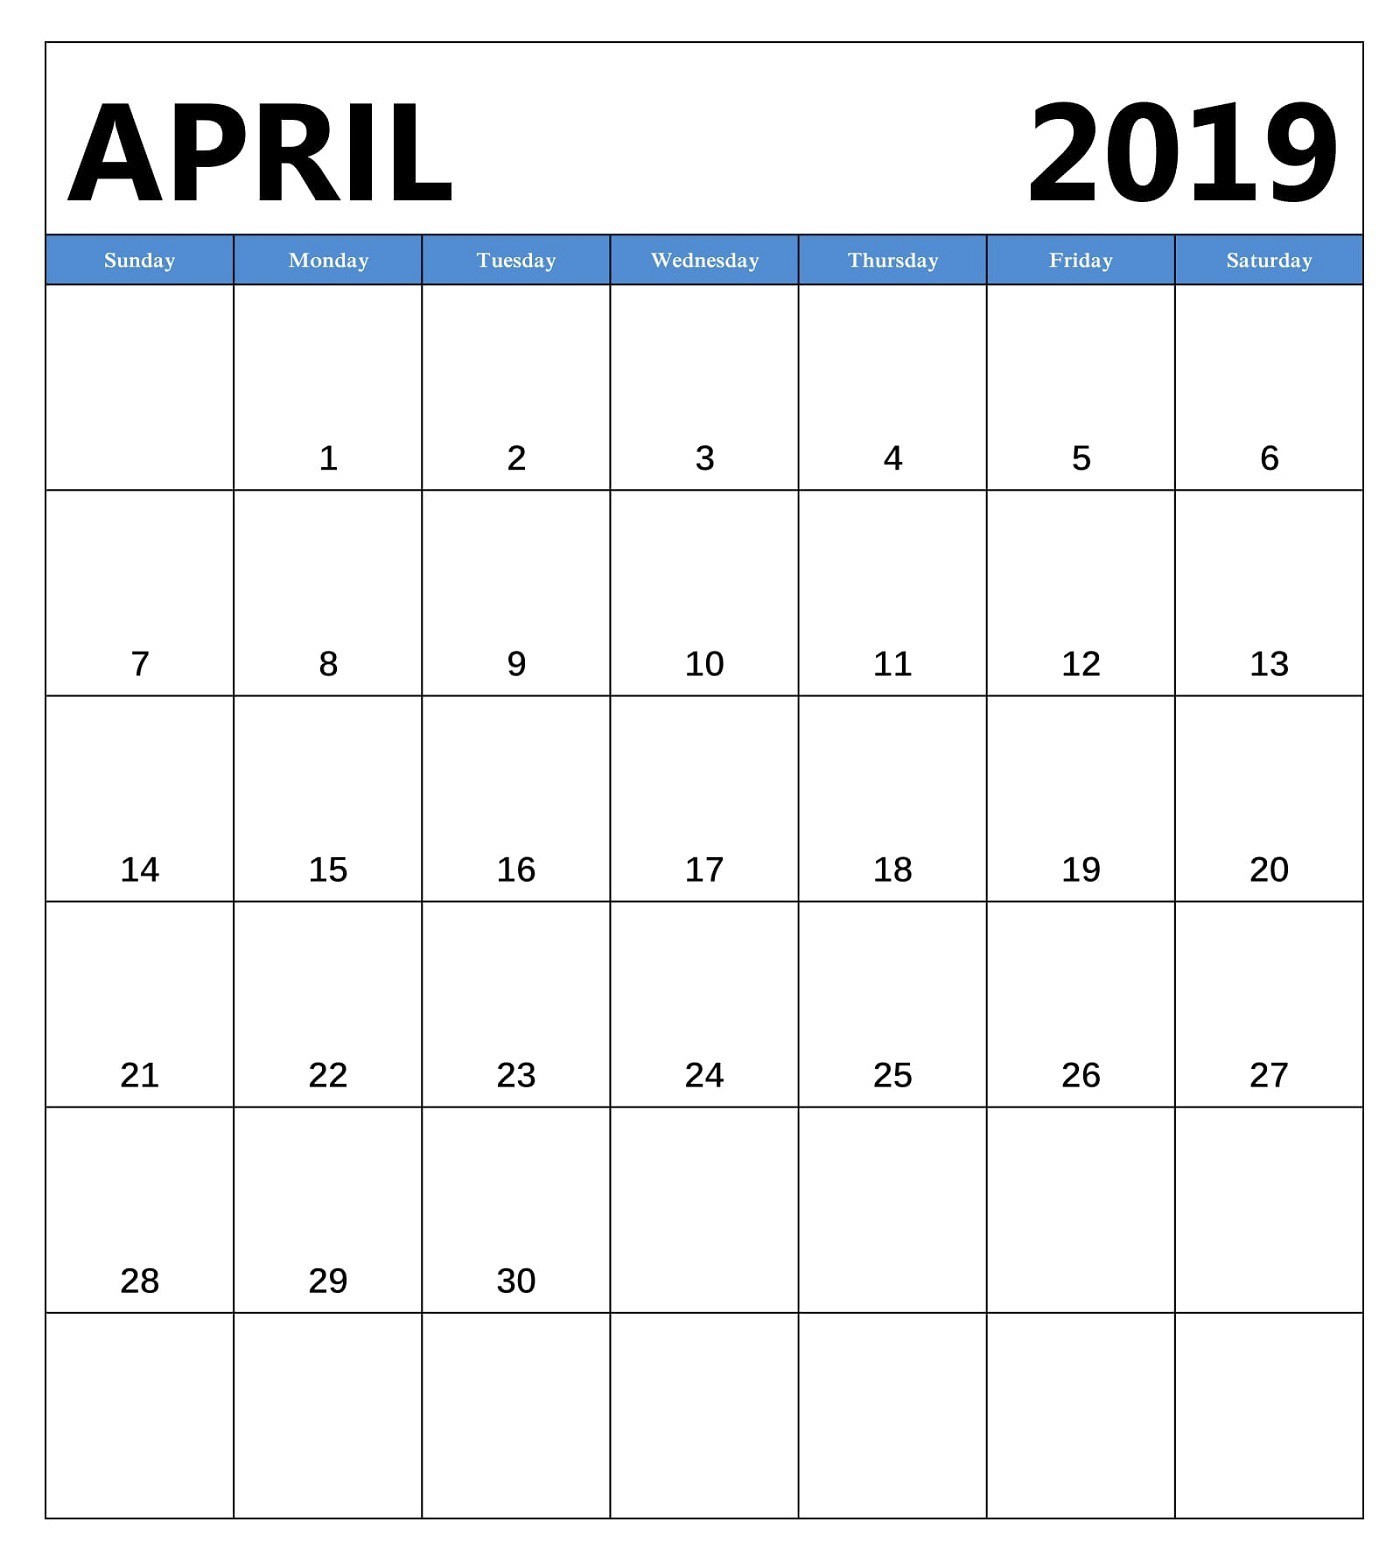 april 2019 calendar calendar 2019